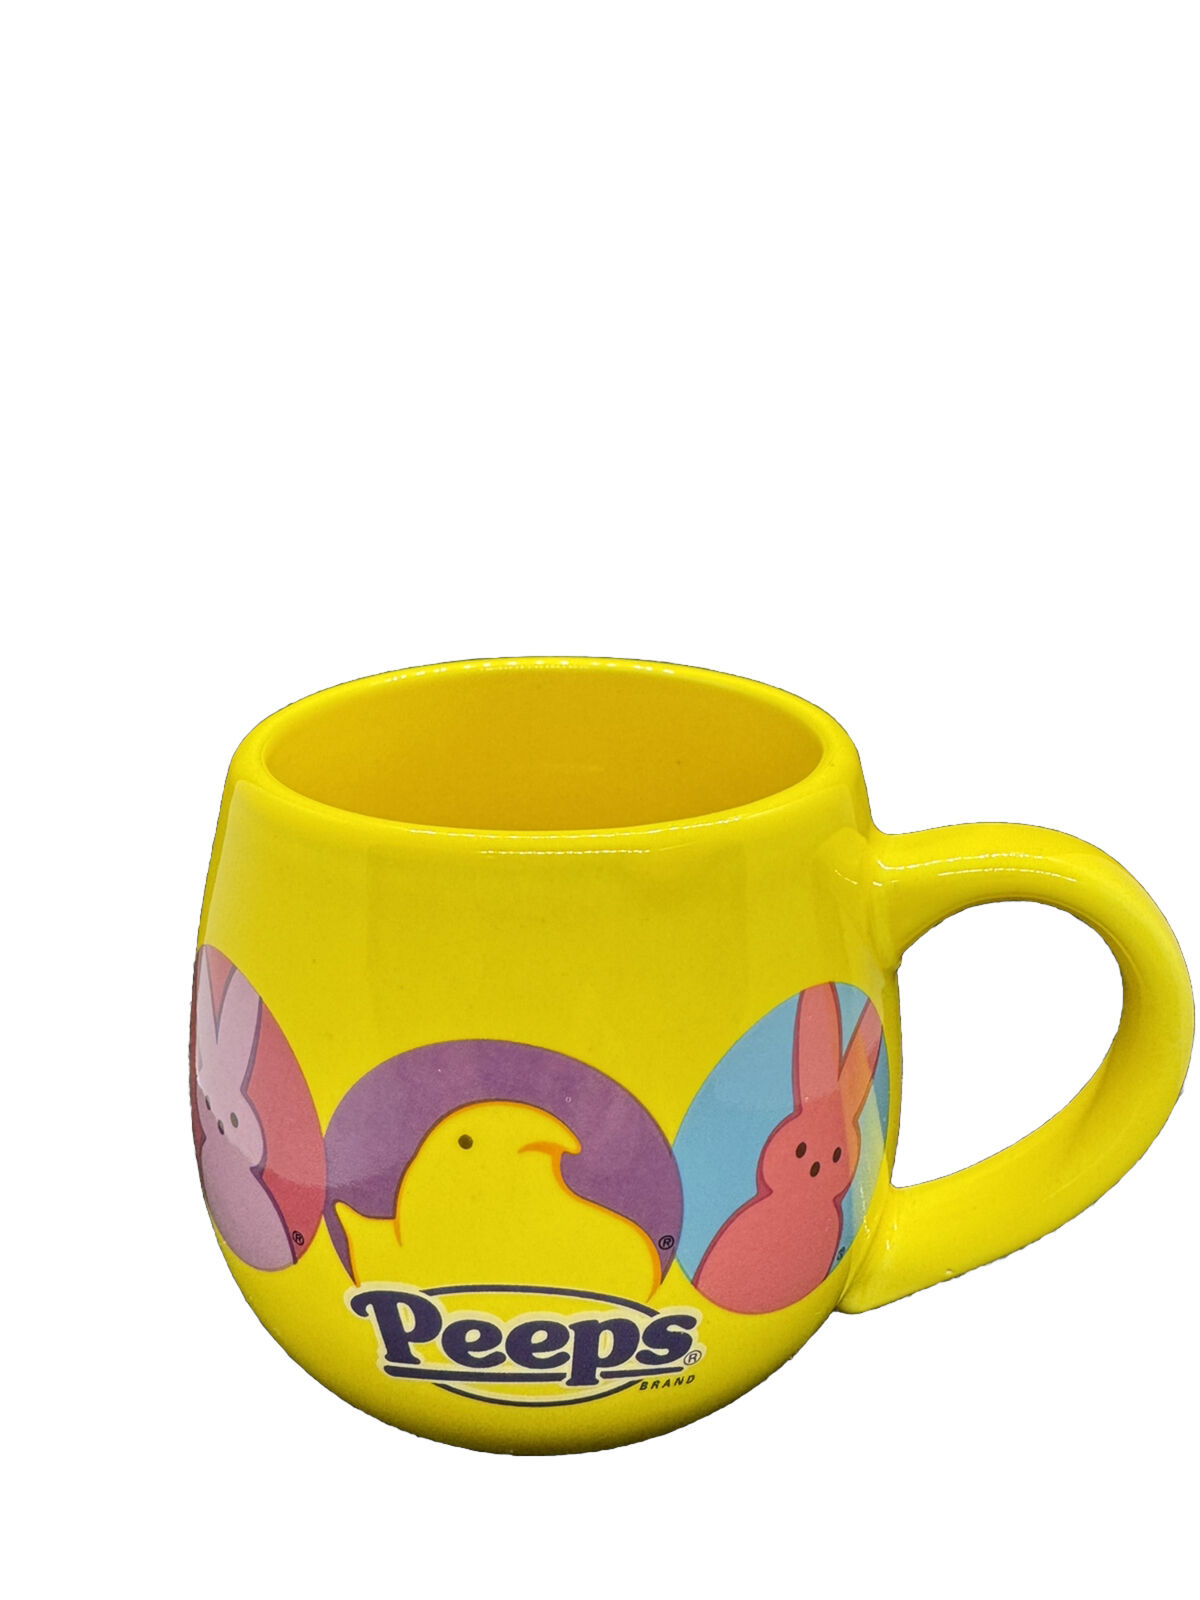 Peeps Brand Easter Mug Yellow Chicken Bunny Rabbit 2021 Just Born, Inc.